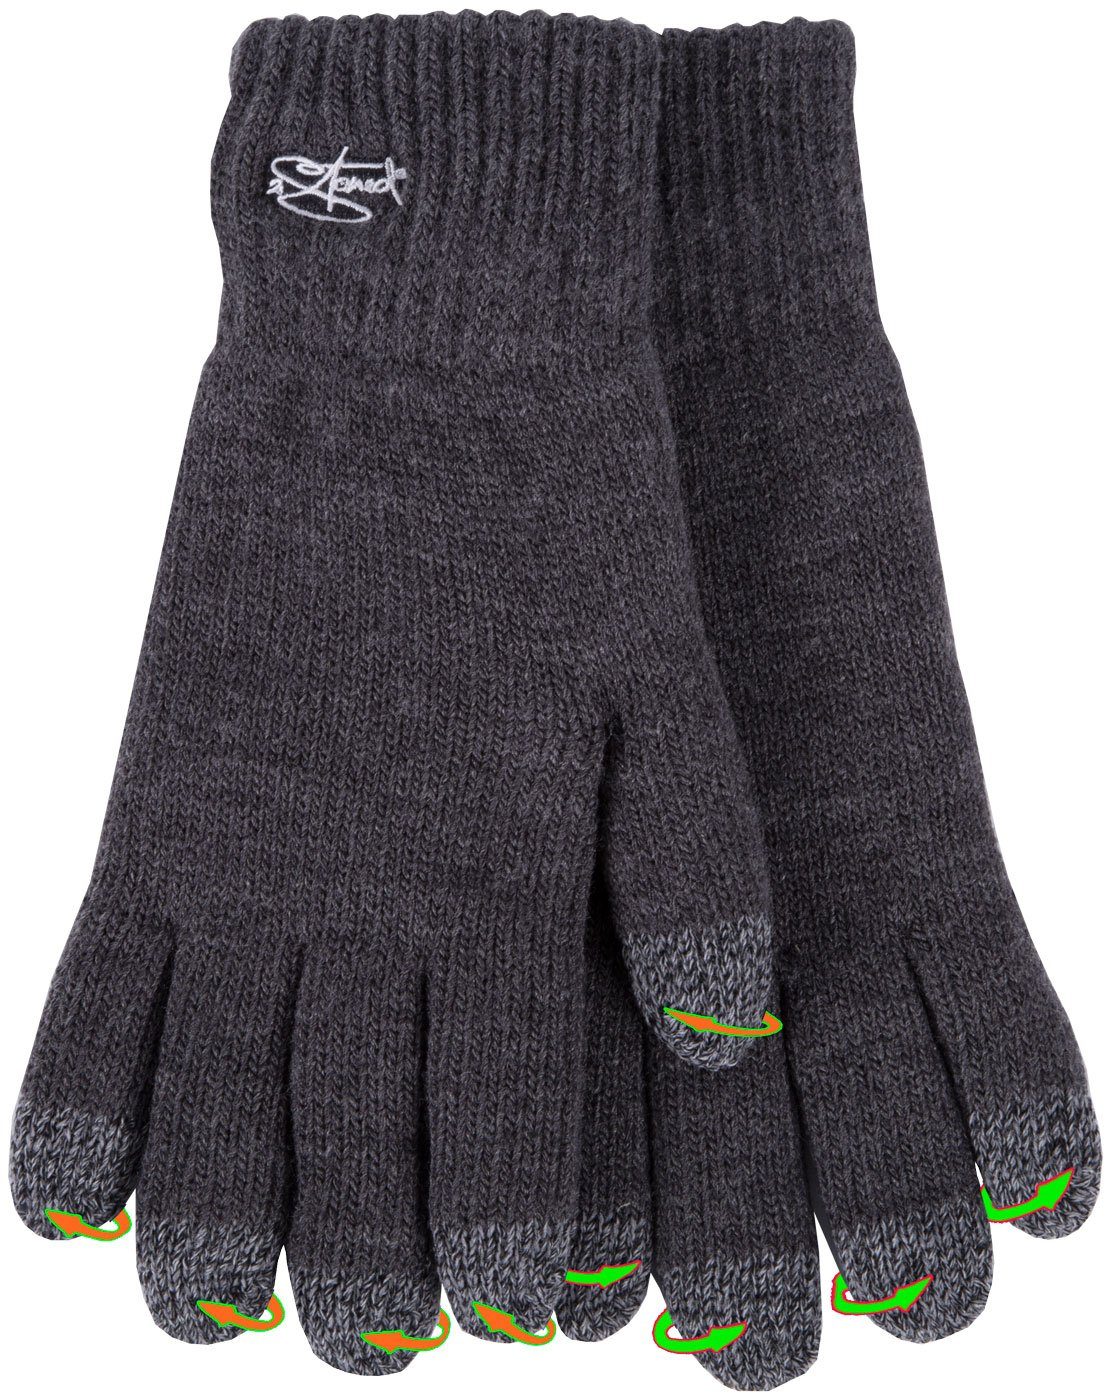 Kinder Teens (Gr. 128 - 182) 2Stoned Strickhandschuhe Handy Handschuhe Touch Damen Gefüttert in Anthrazit, Größe S (VPE, 1 Paar)